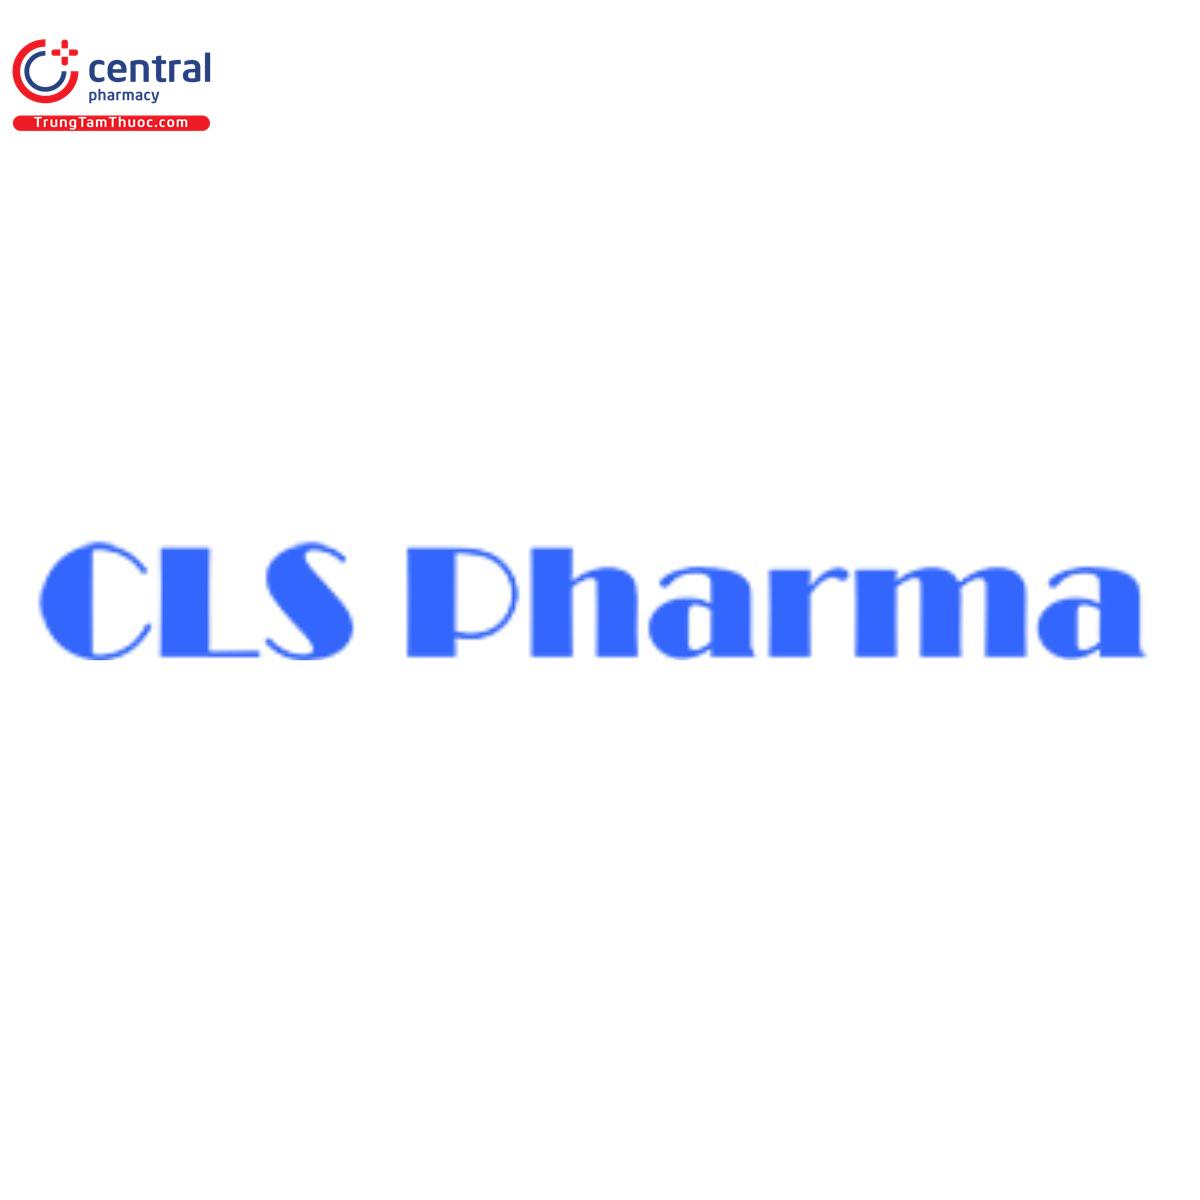 CLS Pharma